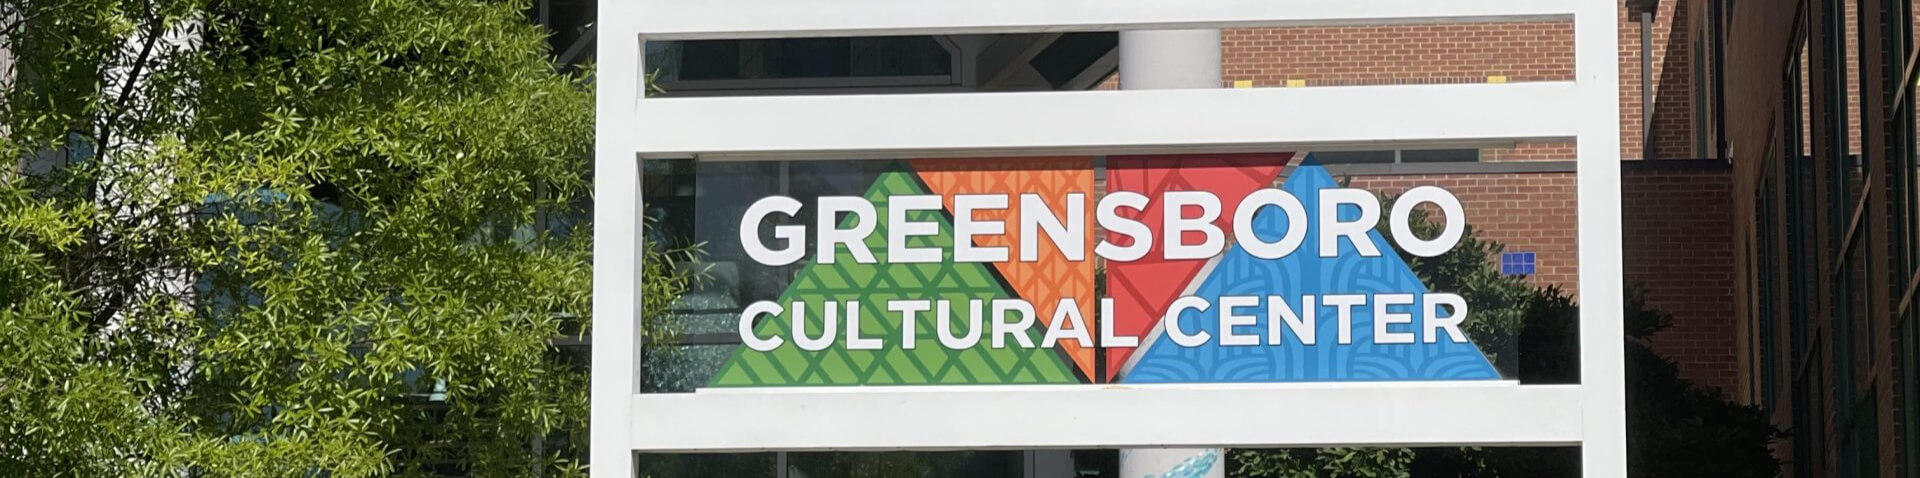 Greensboro Cultural Center entrance